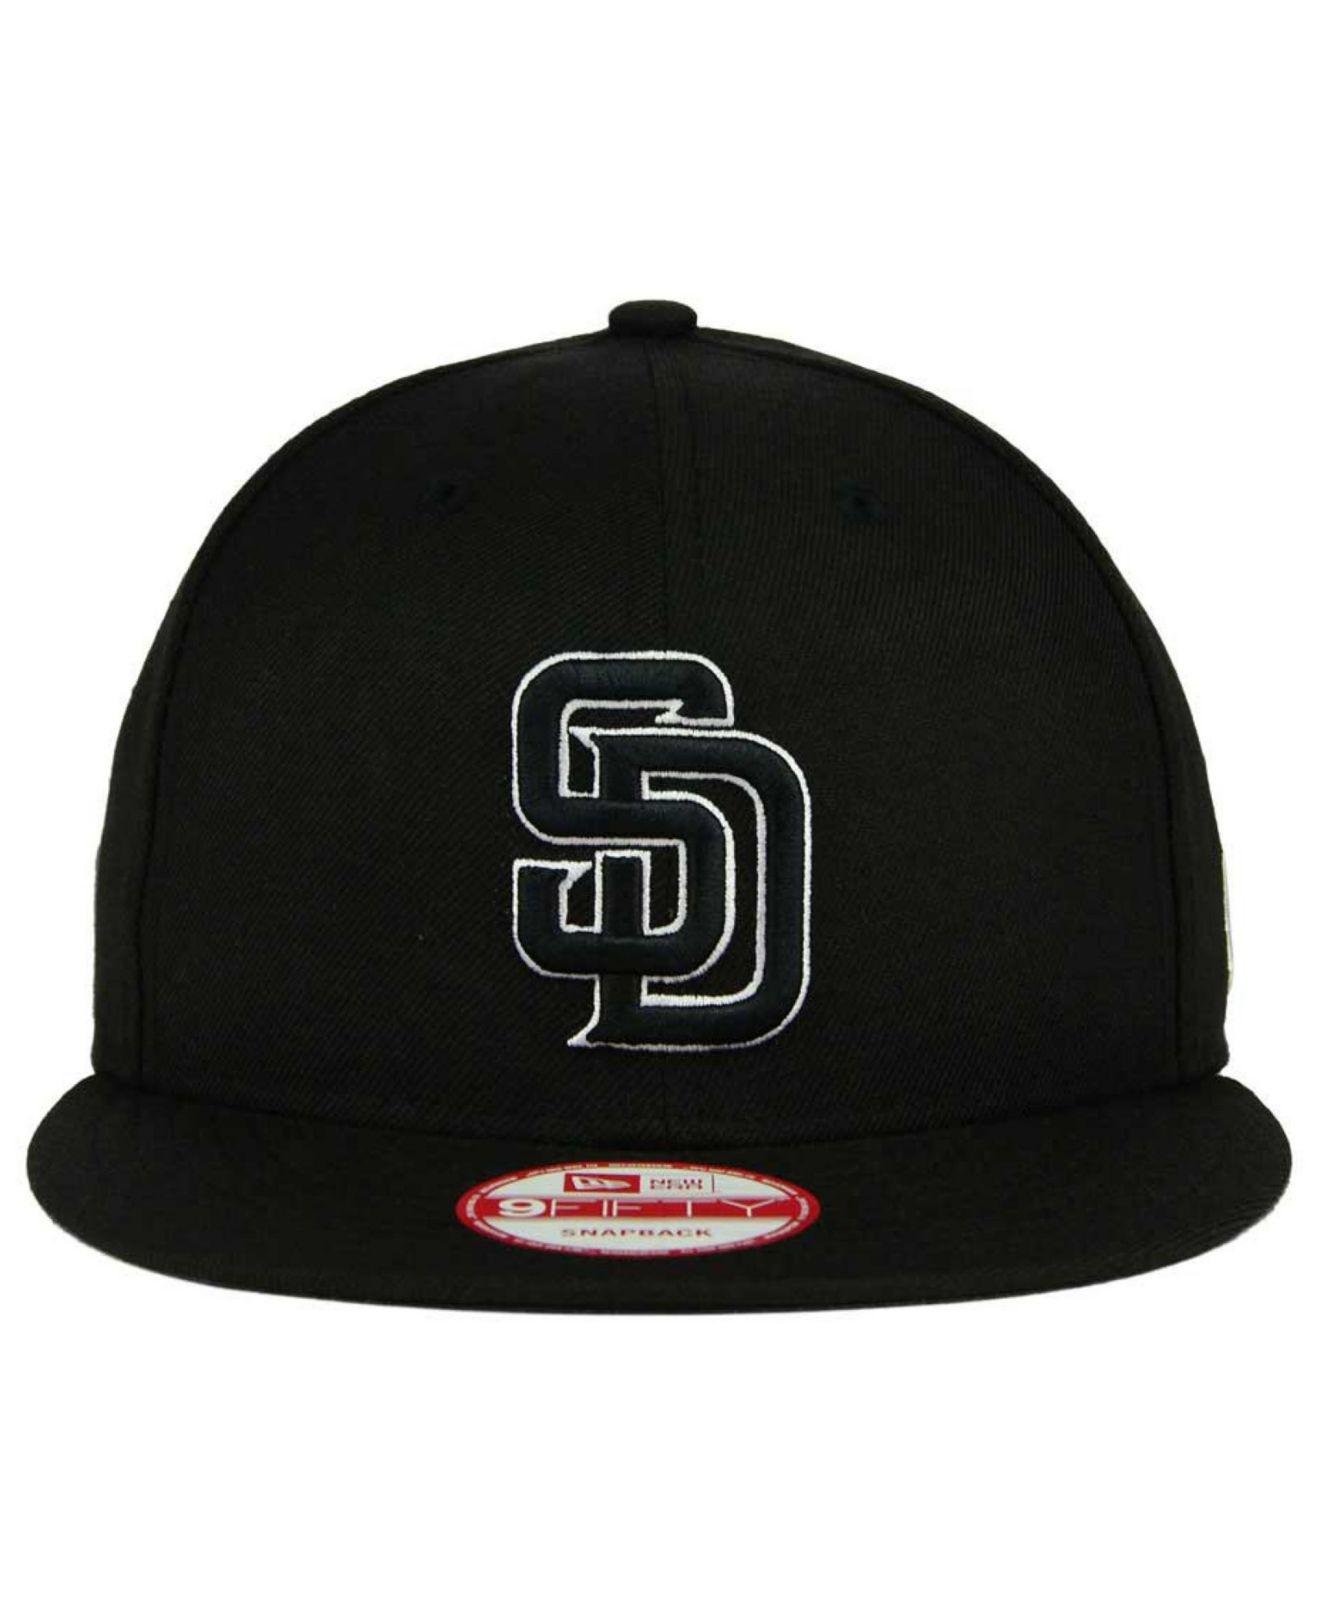 KTZ San Diego Padres B-dub 9fifty Snapback Cap in Black for Men